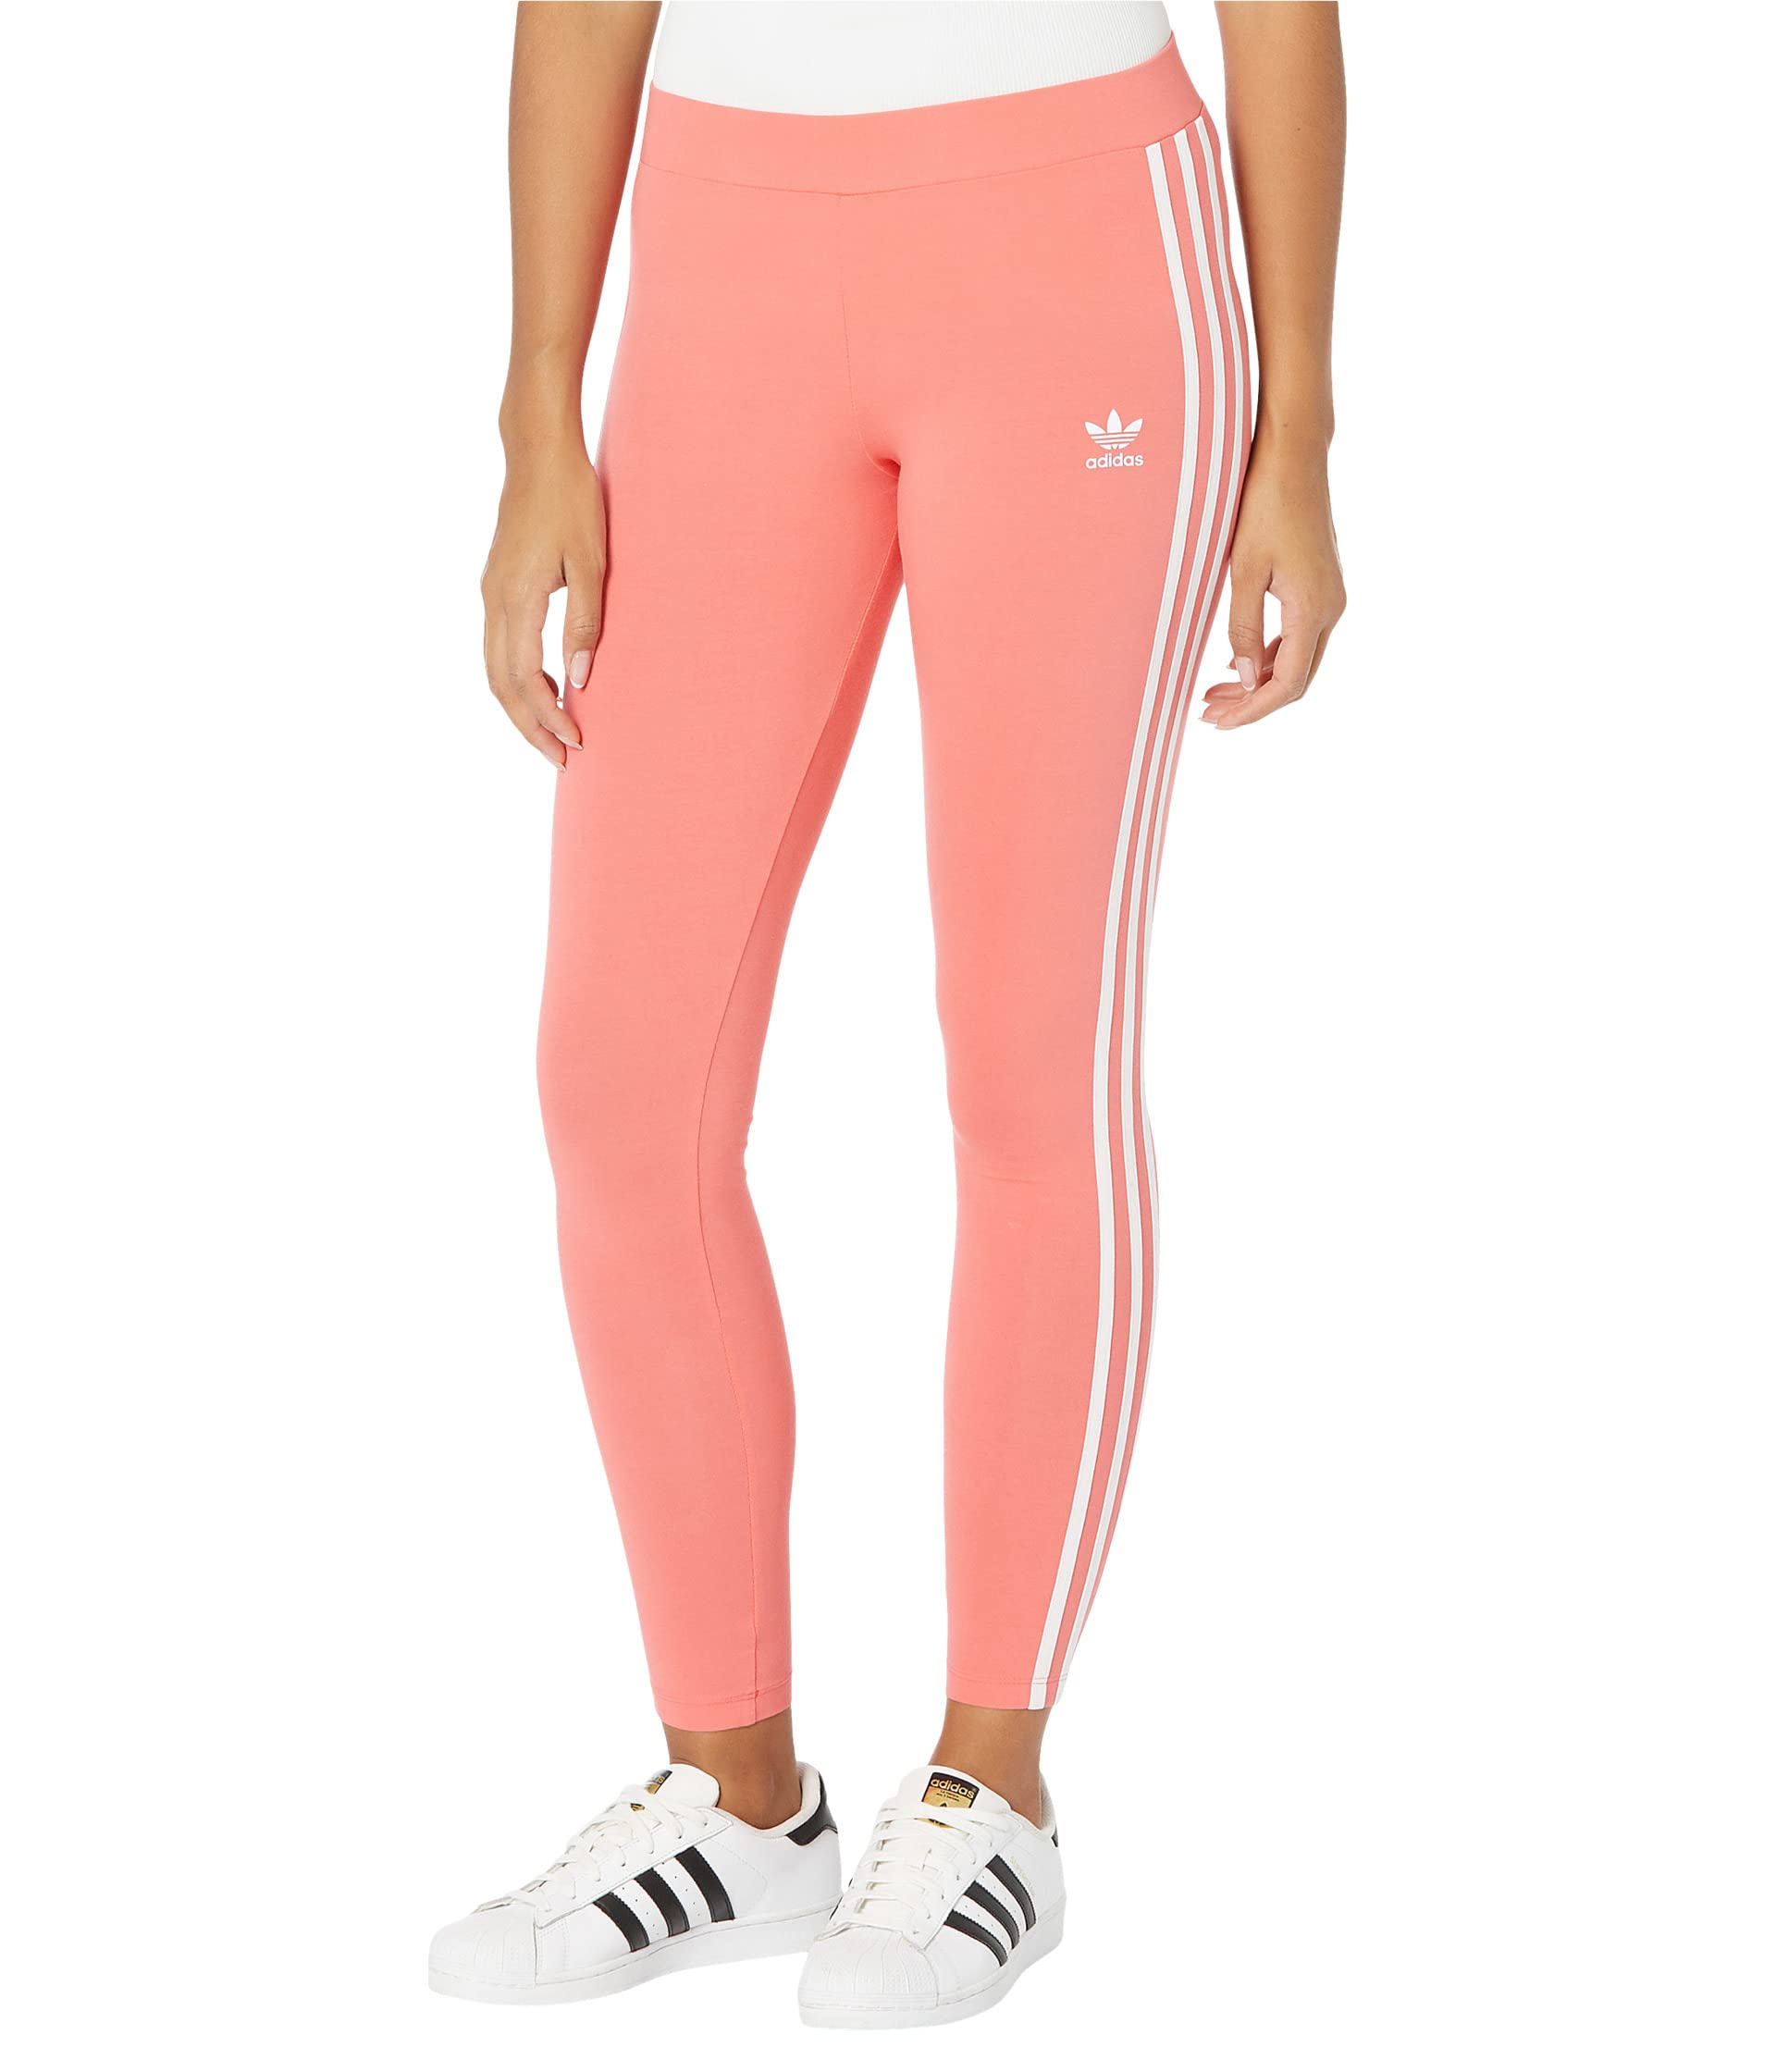 Женские брюки Adidas Originals 3 Stripes, розовый женские брюки adidas originals 3 stripes розовый